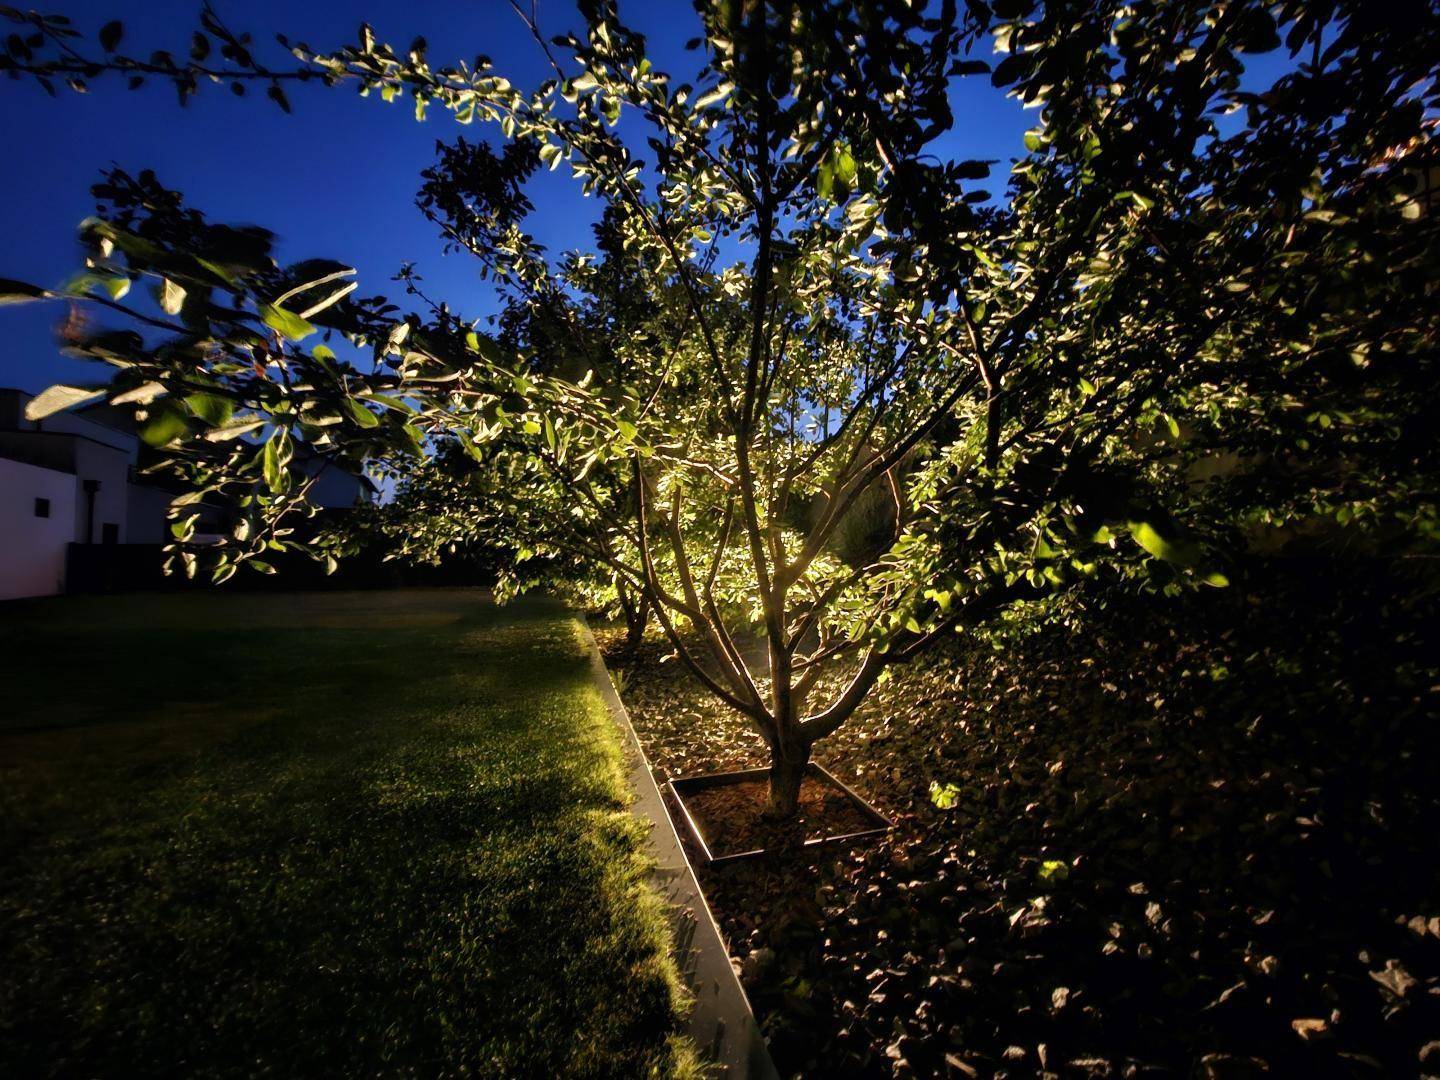 Gartendetail nachts - Baum beleuchtet